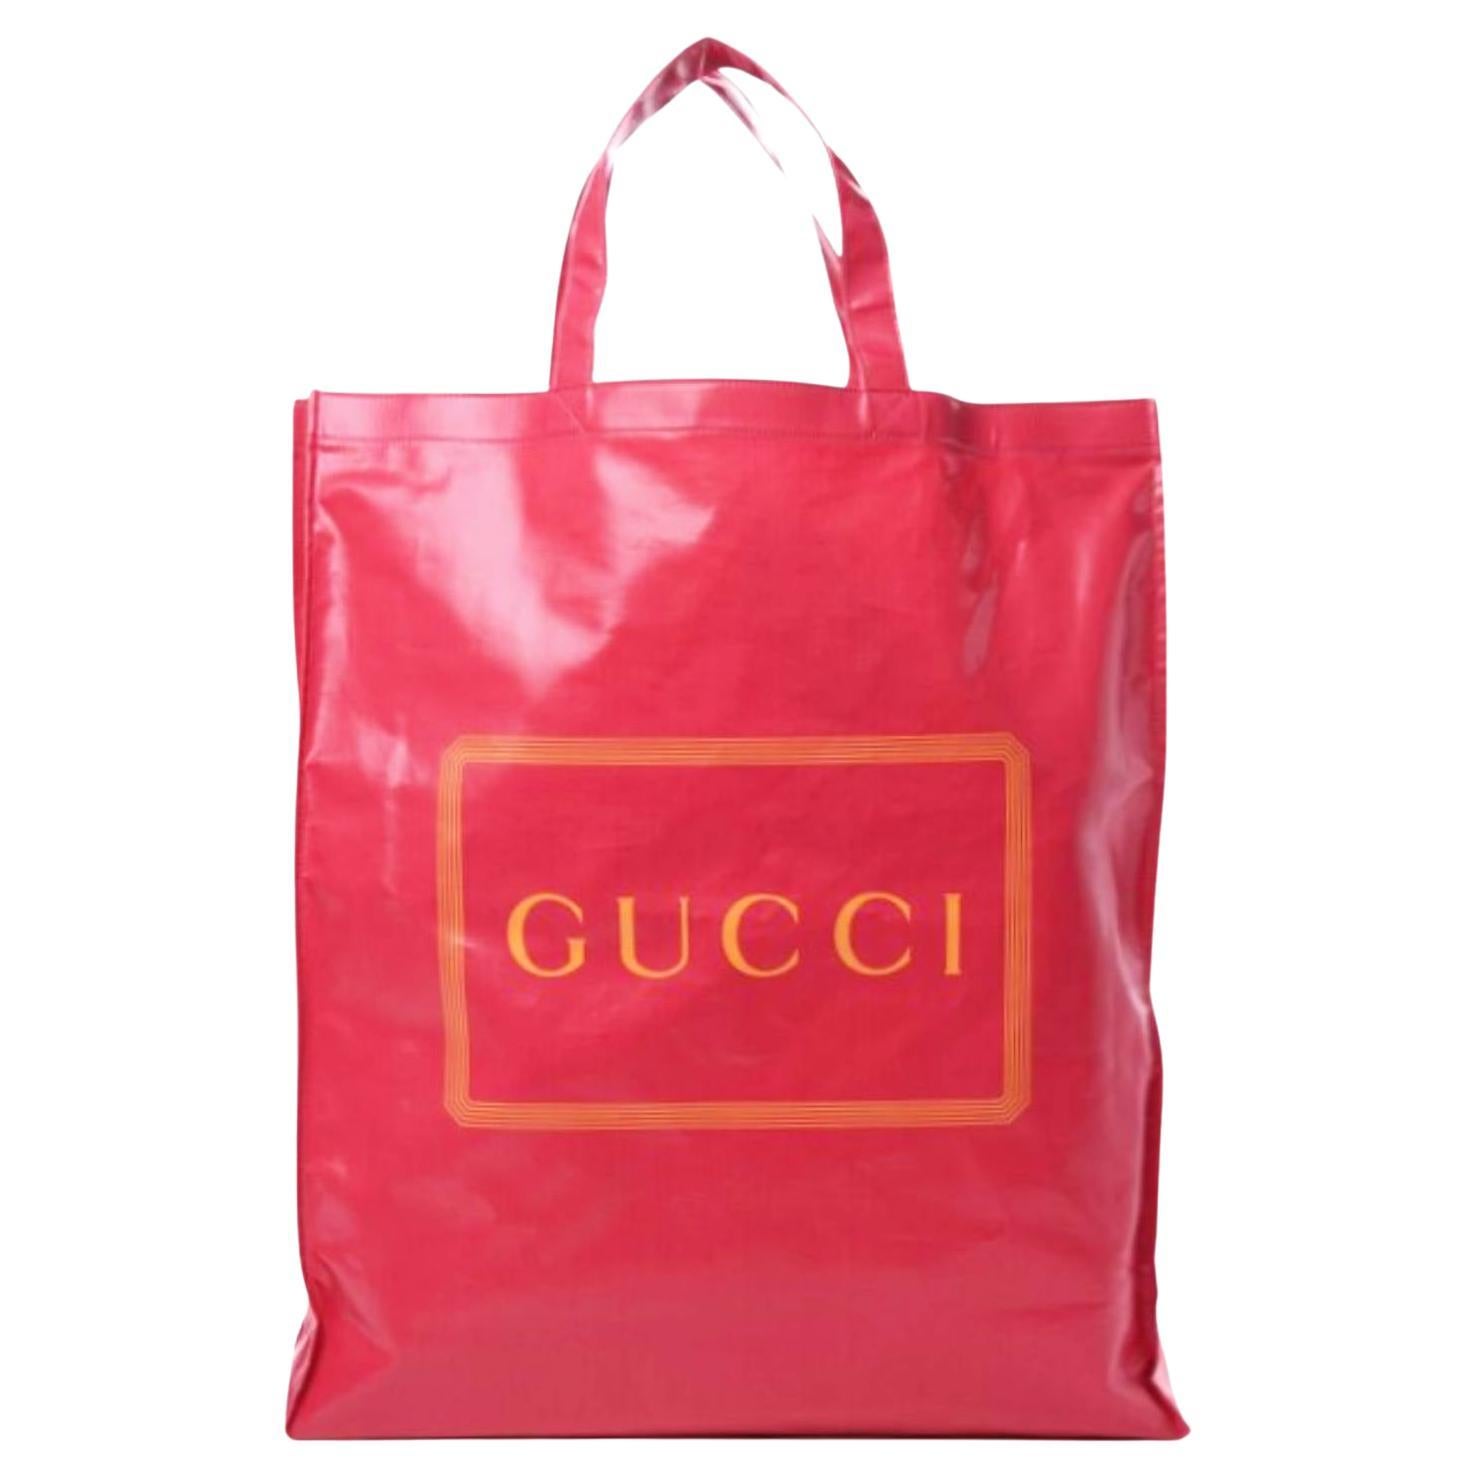 Gucci Montecarlo Crystal Glam Pink Patent Logo Medium Tote Bag 